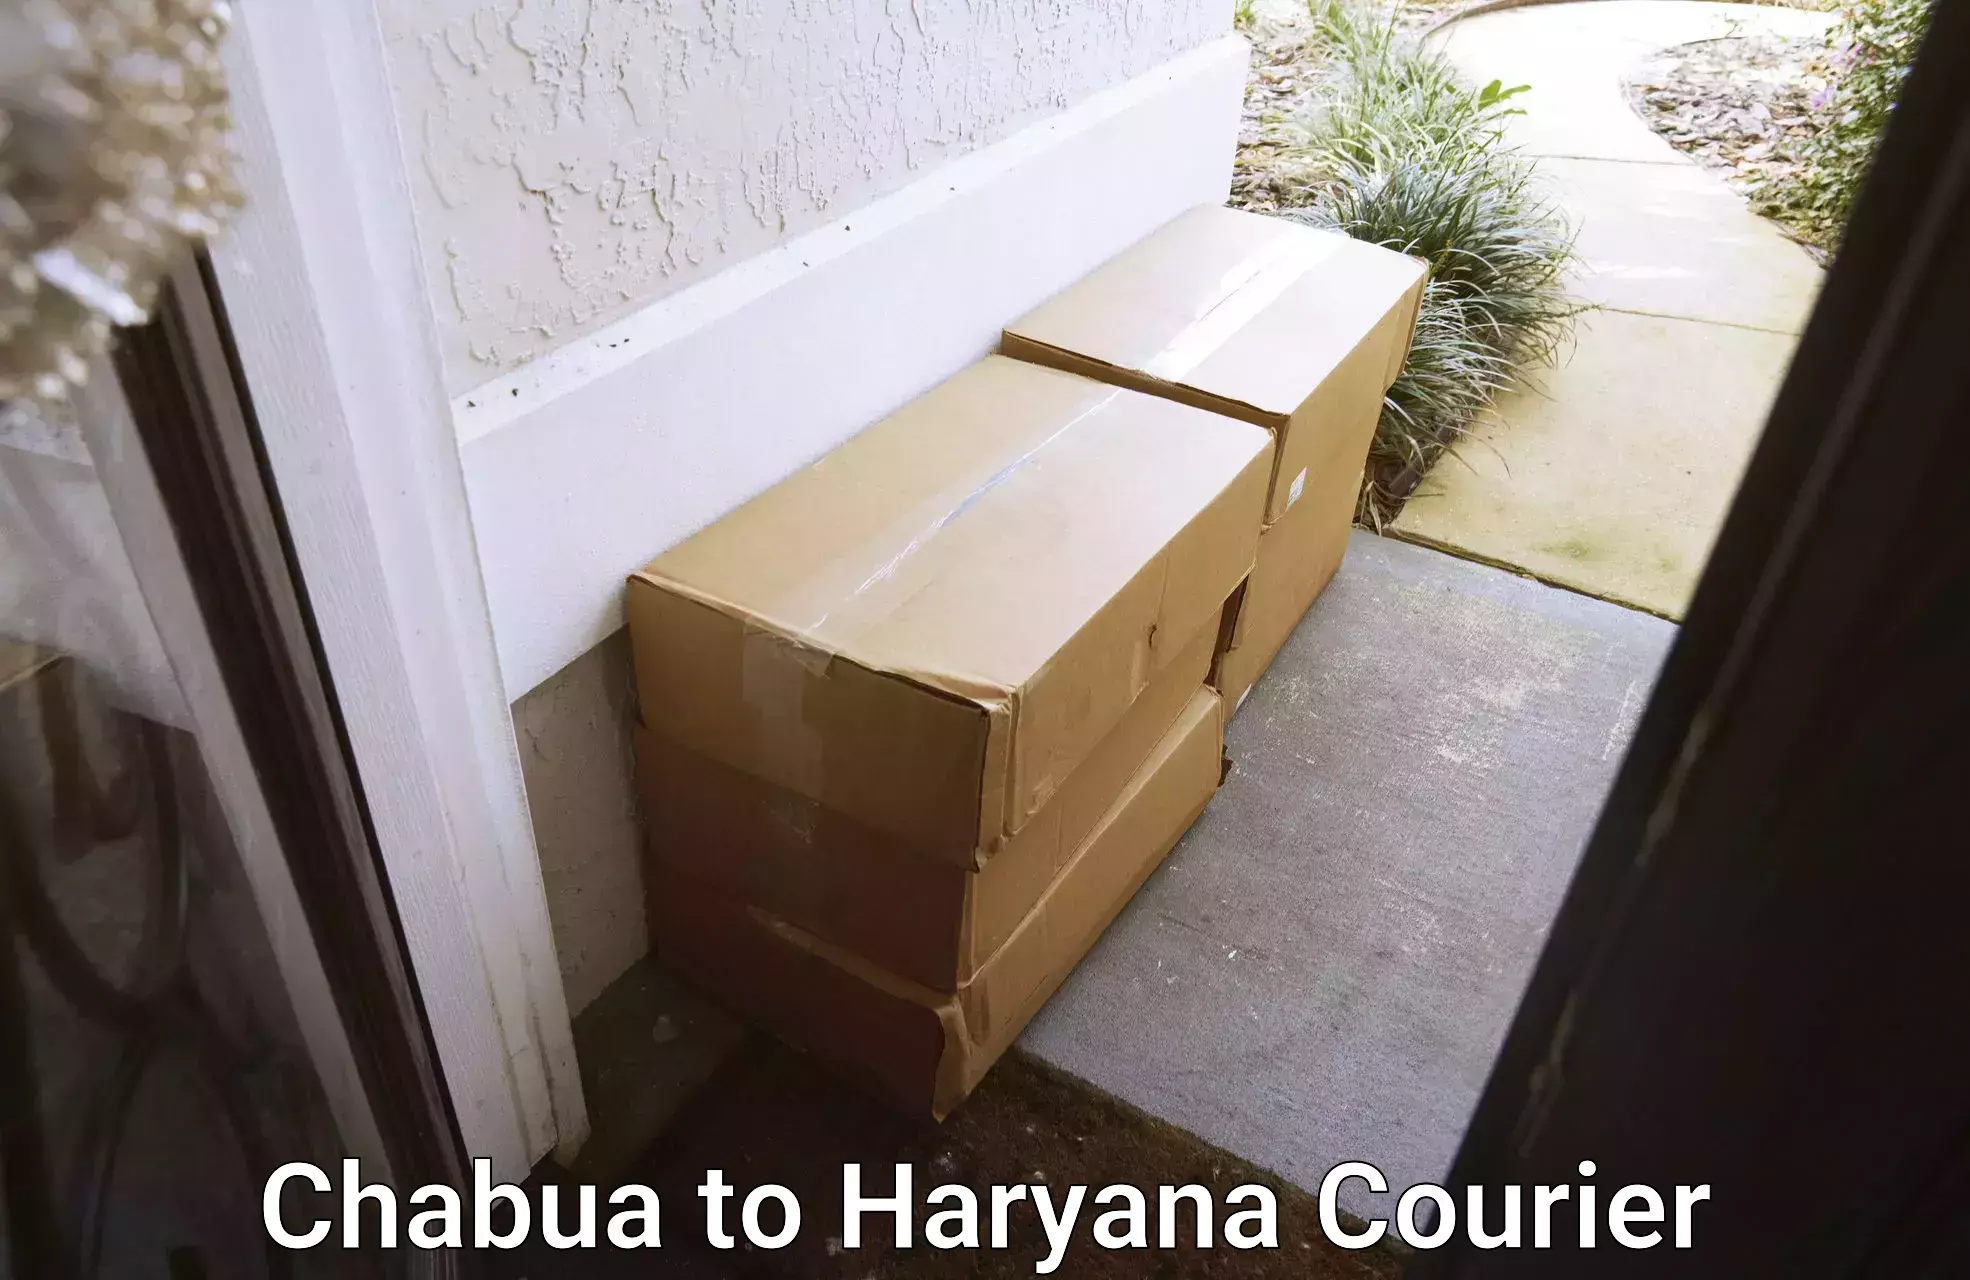 Courier service efficiency Chabua to Haryana